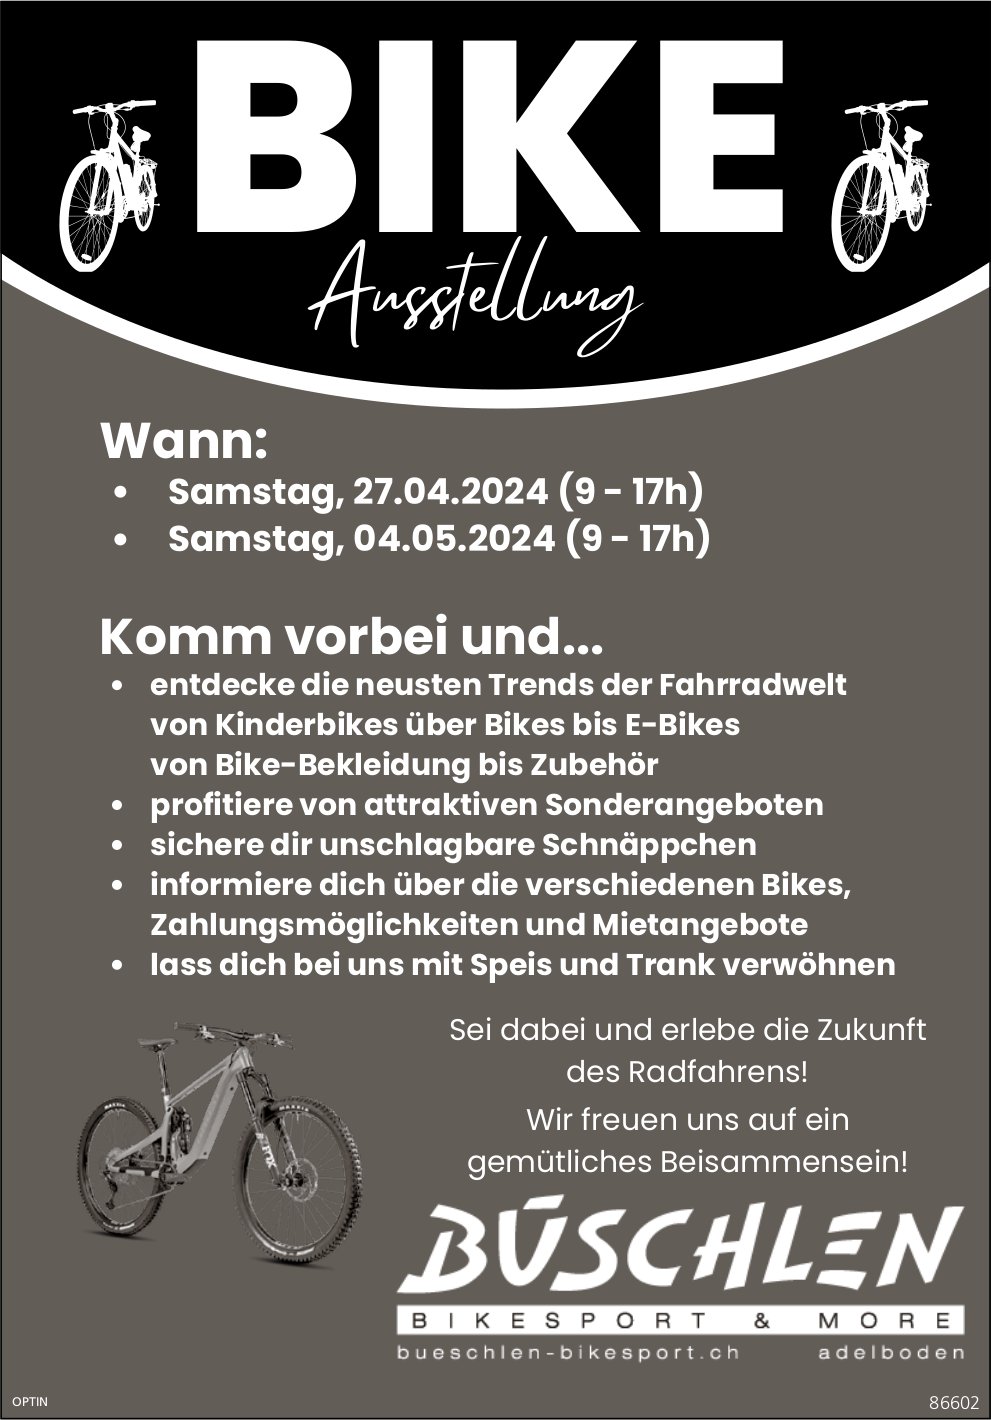 BIKE Ausstellung, 4. Mai, Büschlen Bikesport & More, Adelboden